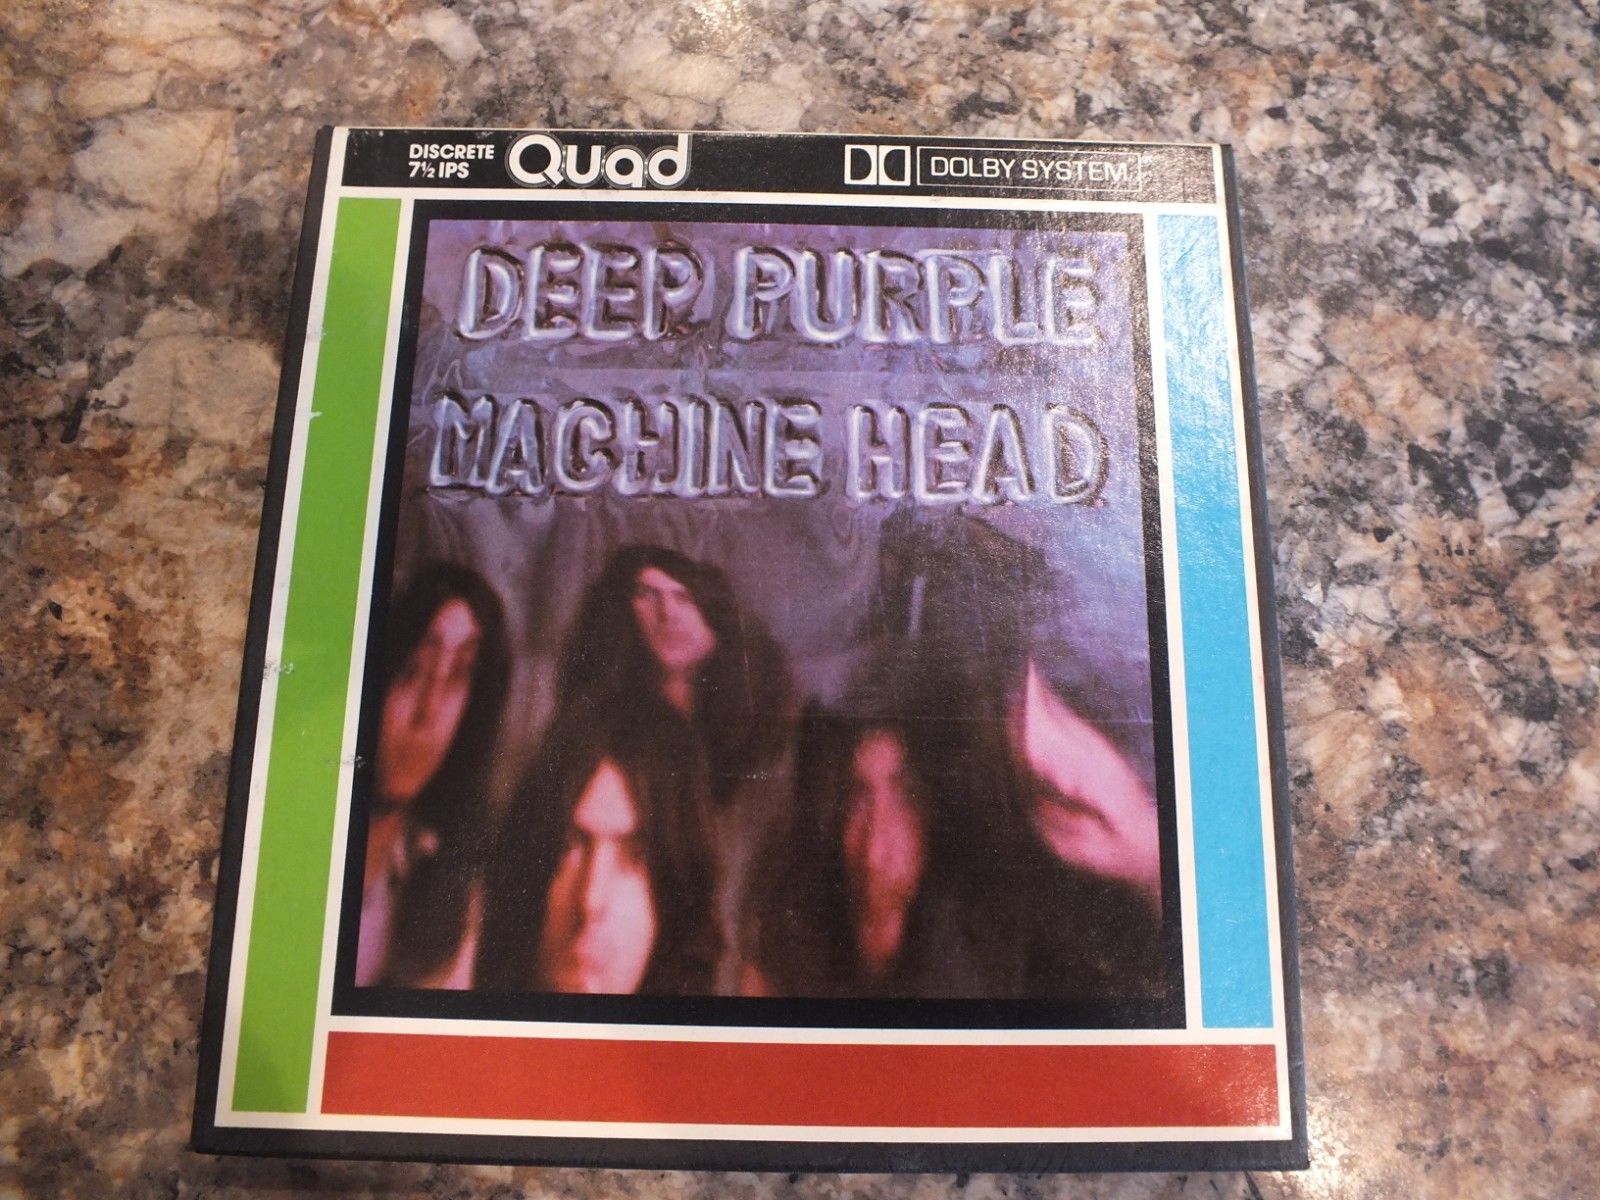  Reel to Reel Tape 7.5 IPS Quadraphonic Deep Purple